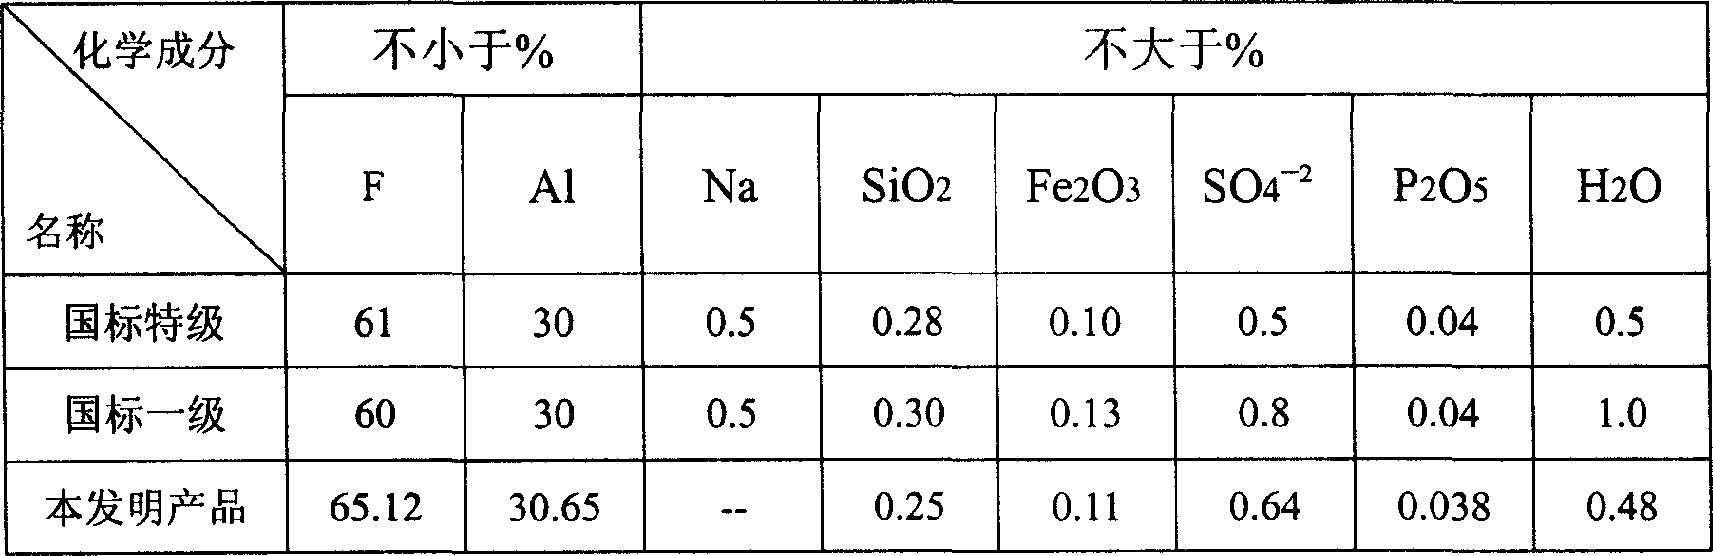 Fluorine-containing waste gas utilization method in phosphorus fertilizer production